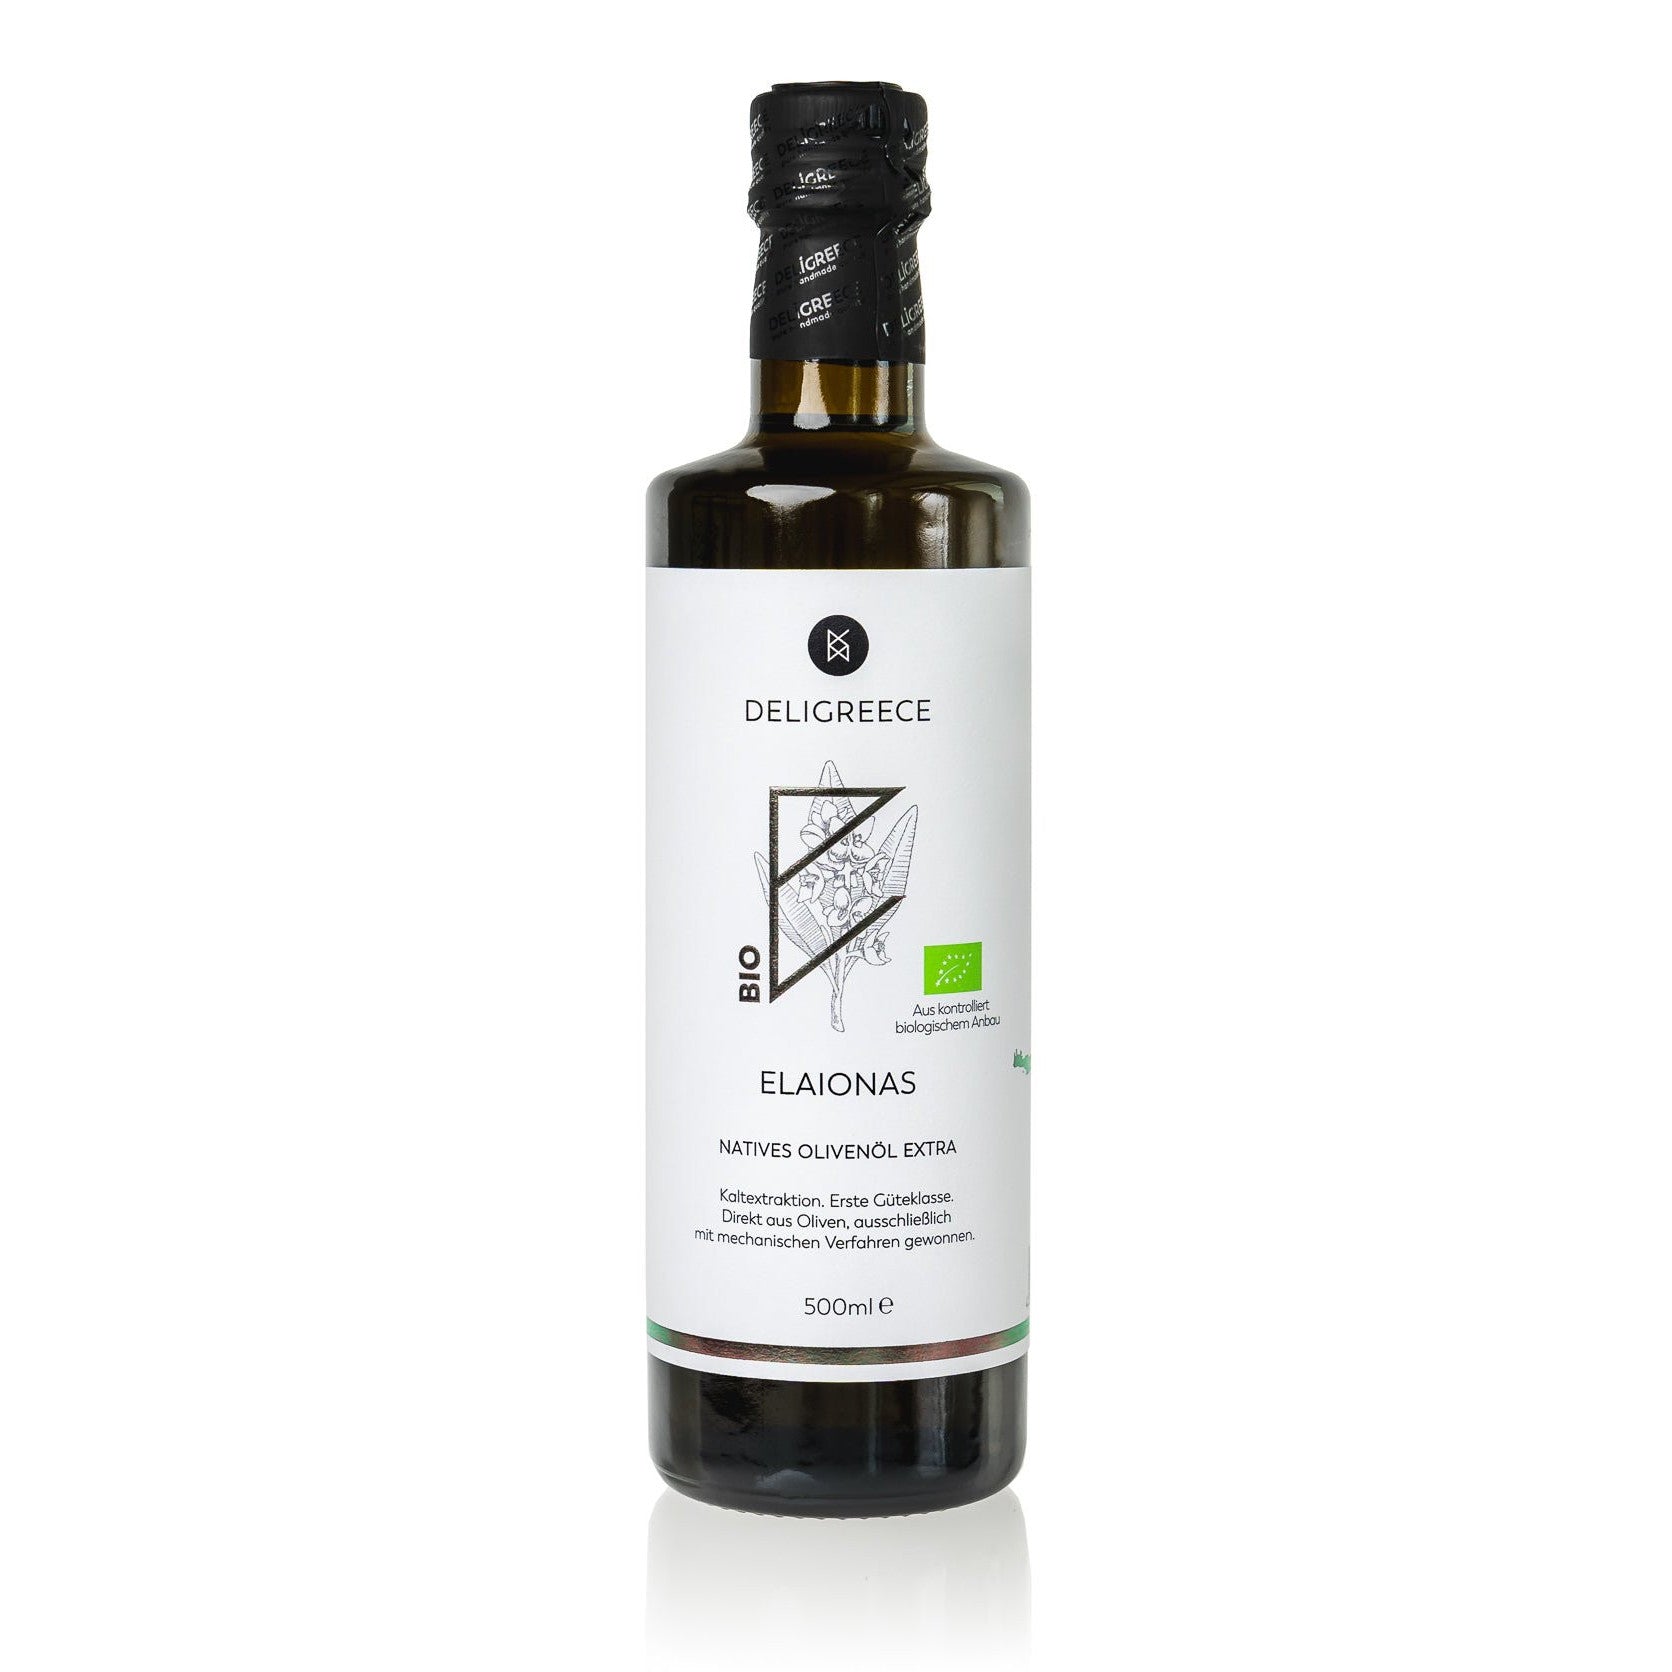 Deligreece Elaionas BIO natives Olivenöl extra (0,5l) - Gourmet Markt - Deligreece